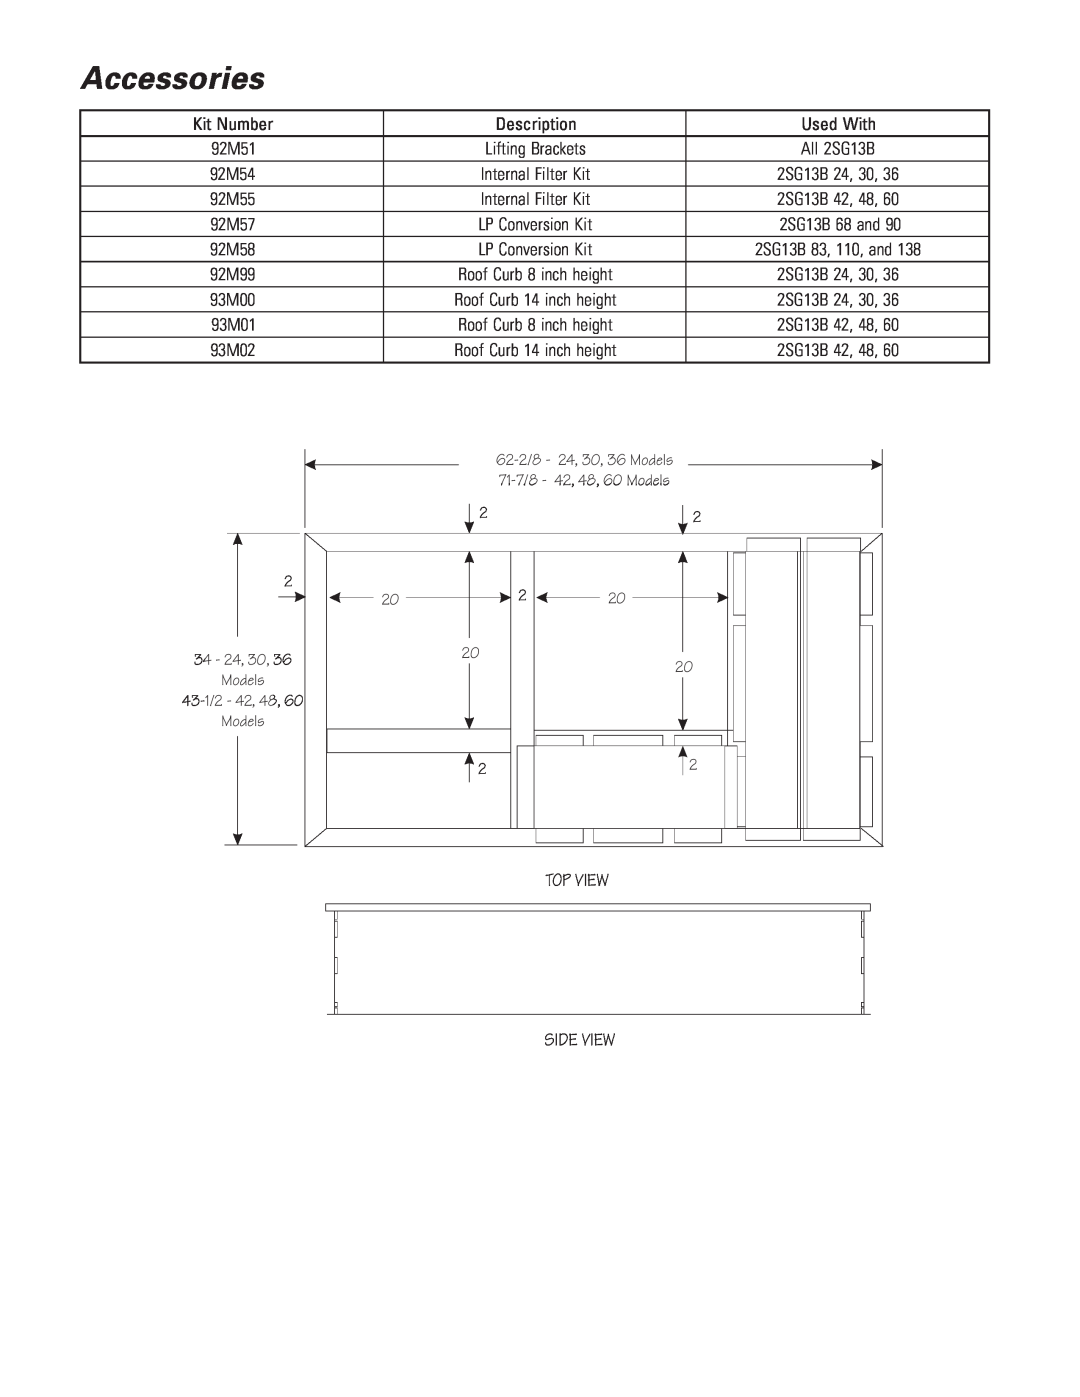 Ducane (HVAC) 2SG13B warranty Accessories, Top View, Side View 